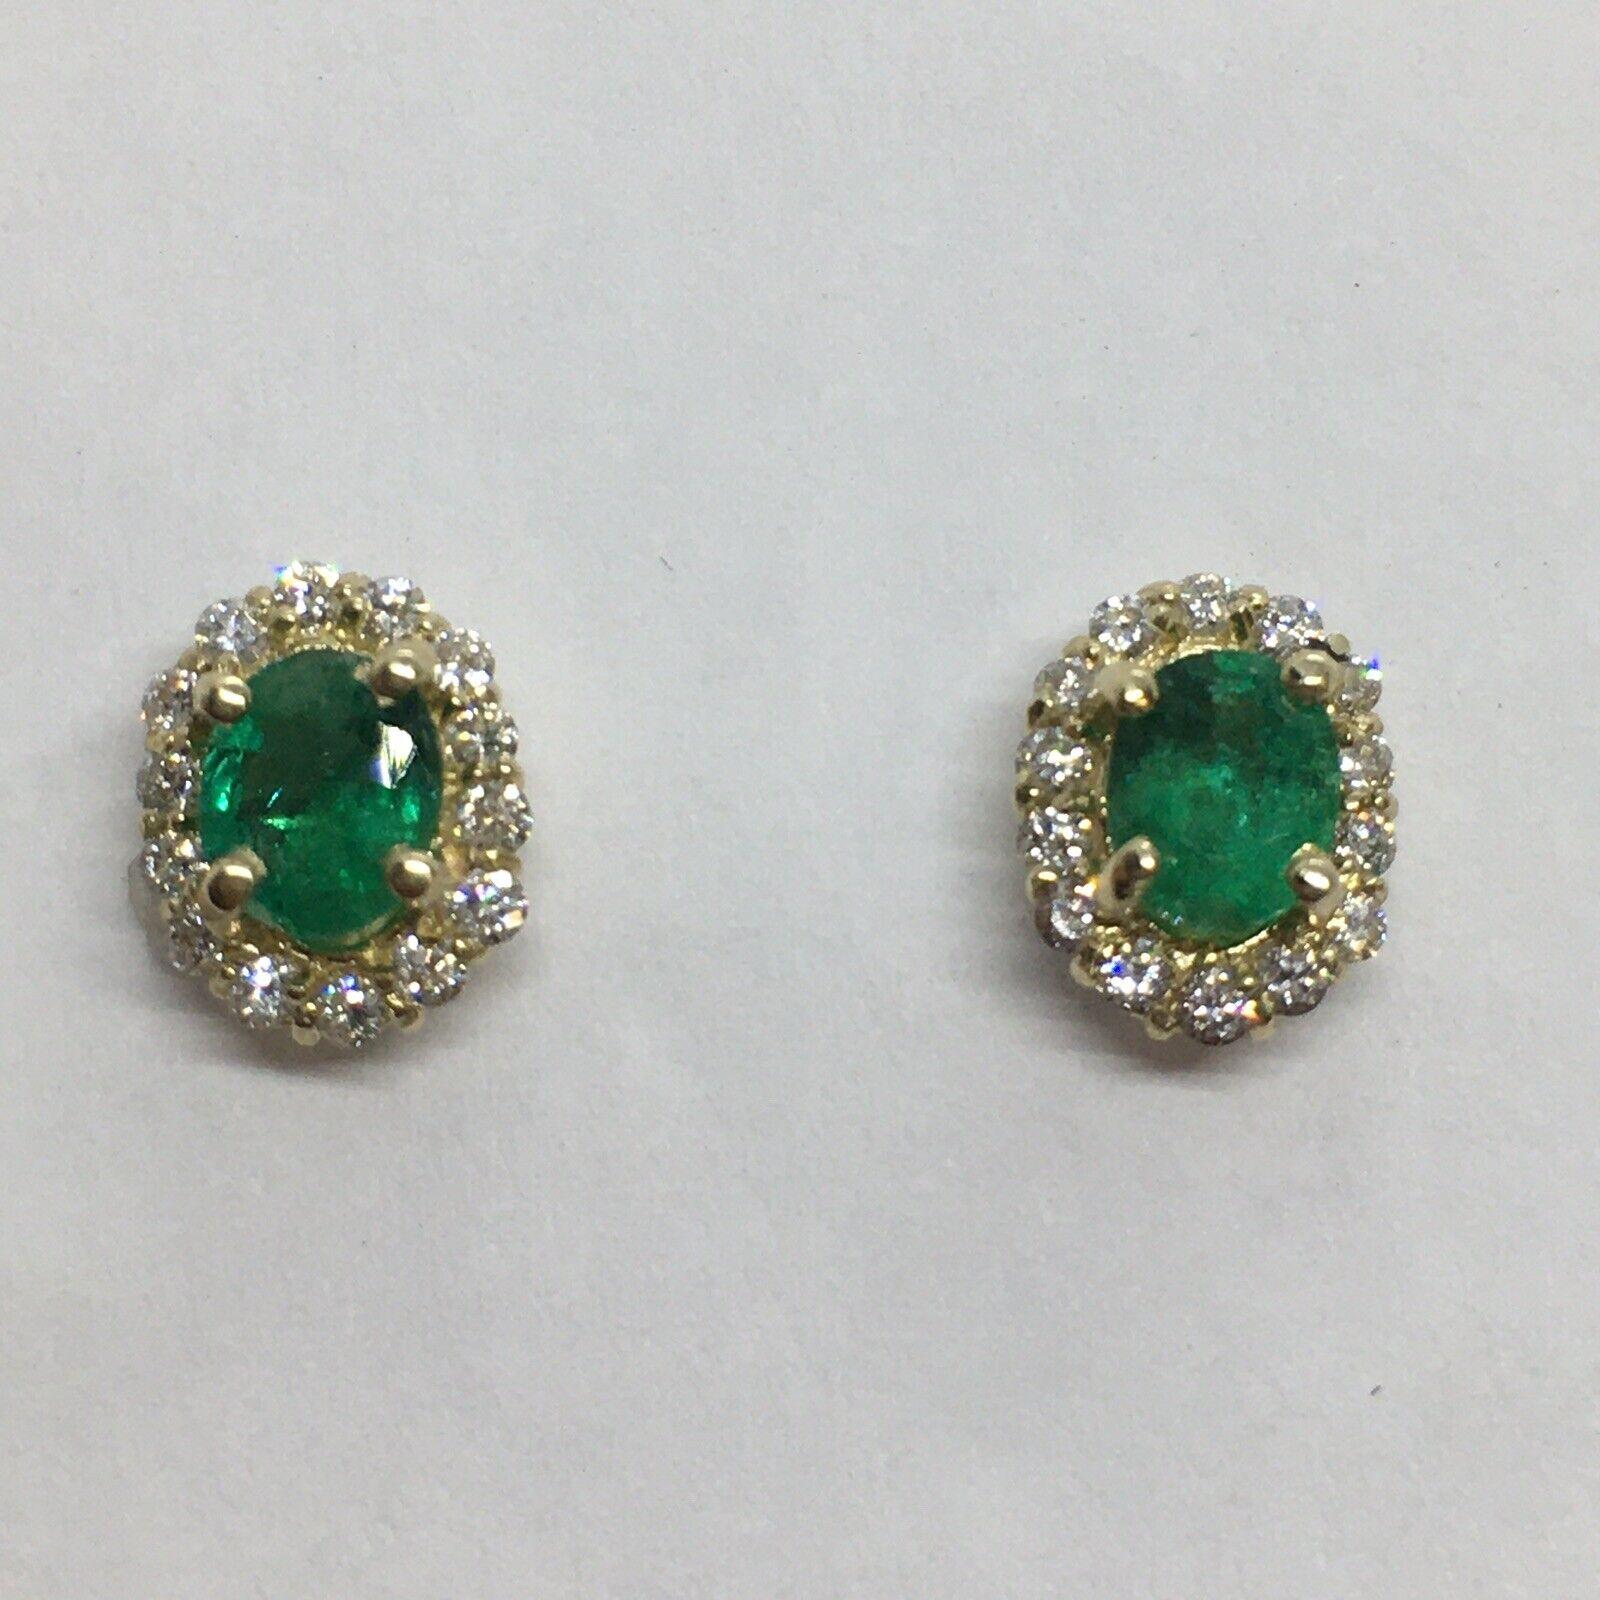 1 carat emerald earrings